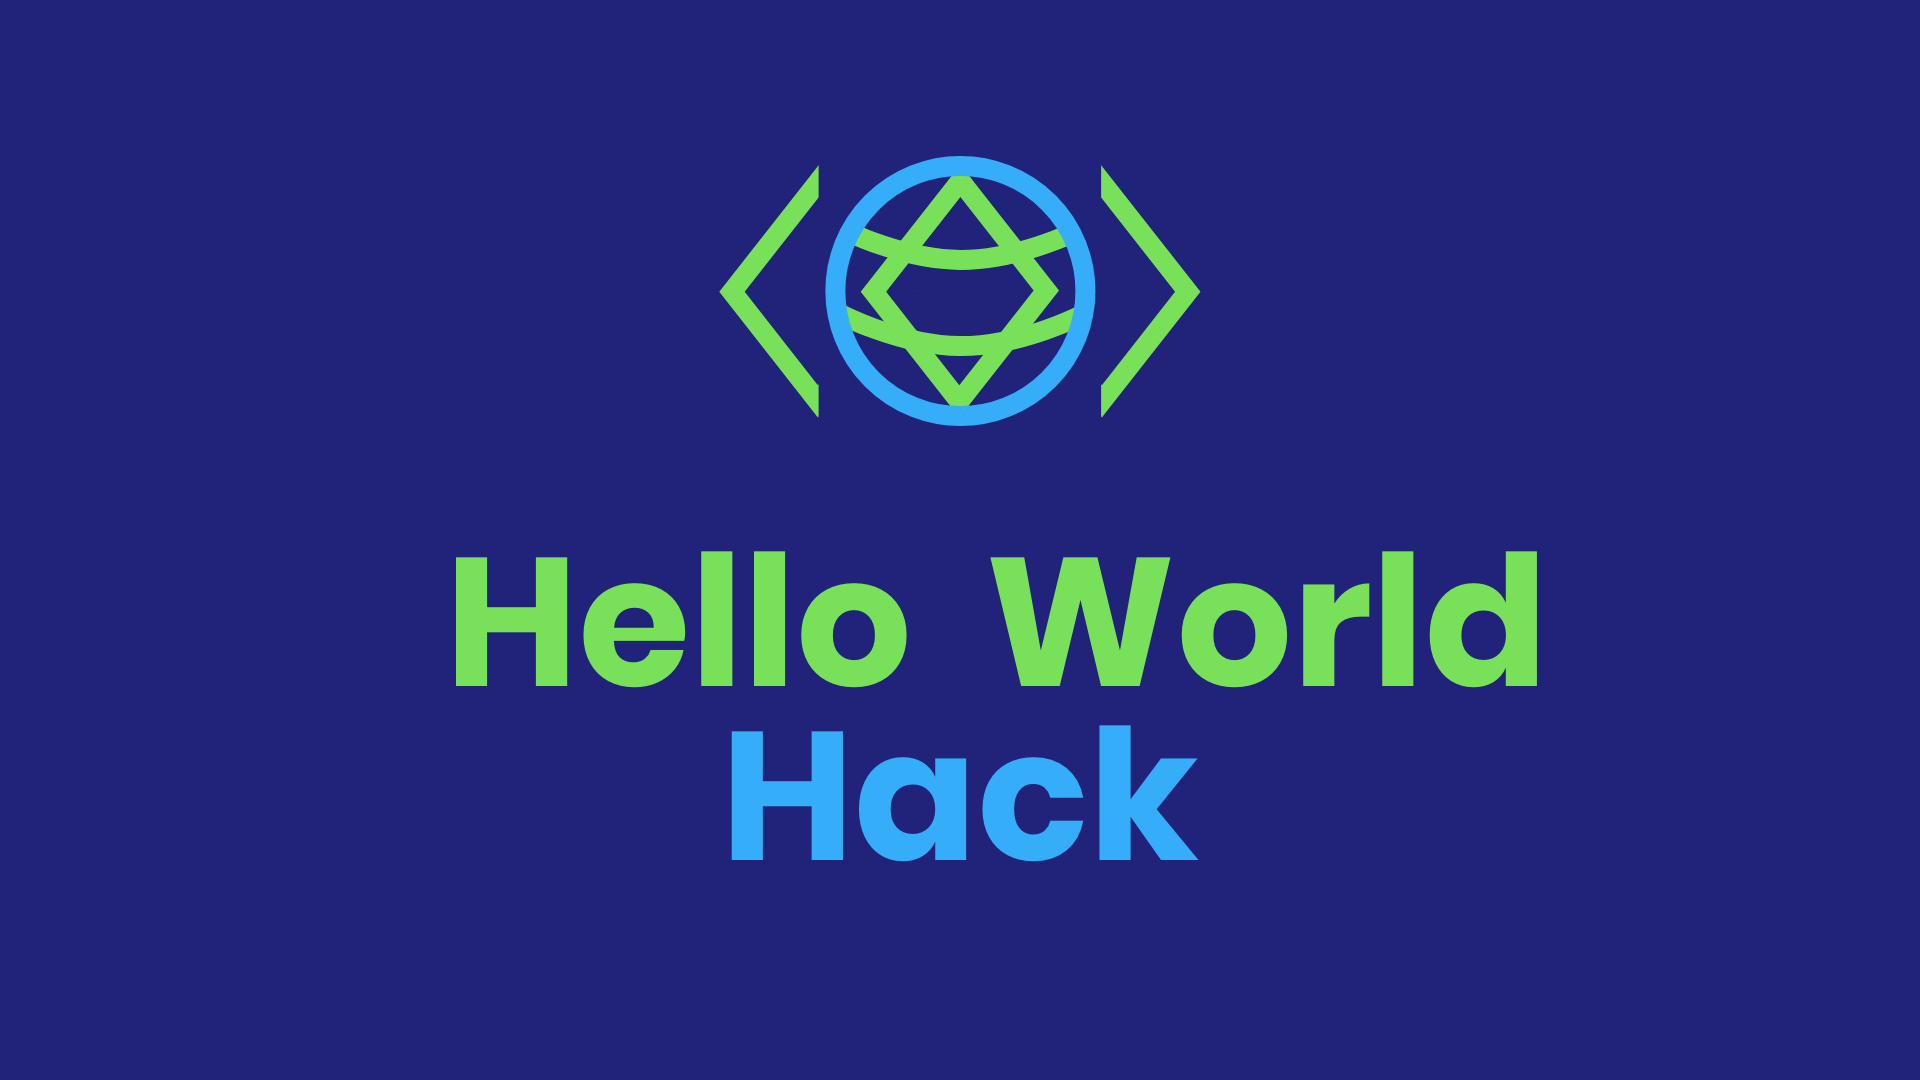 Hello world hack 2019 logo